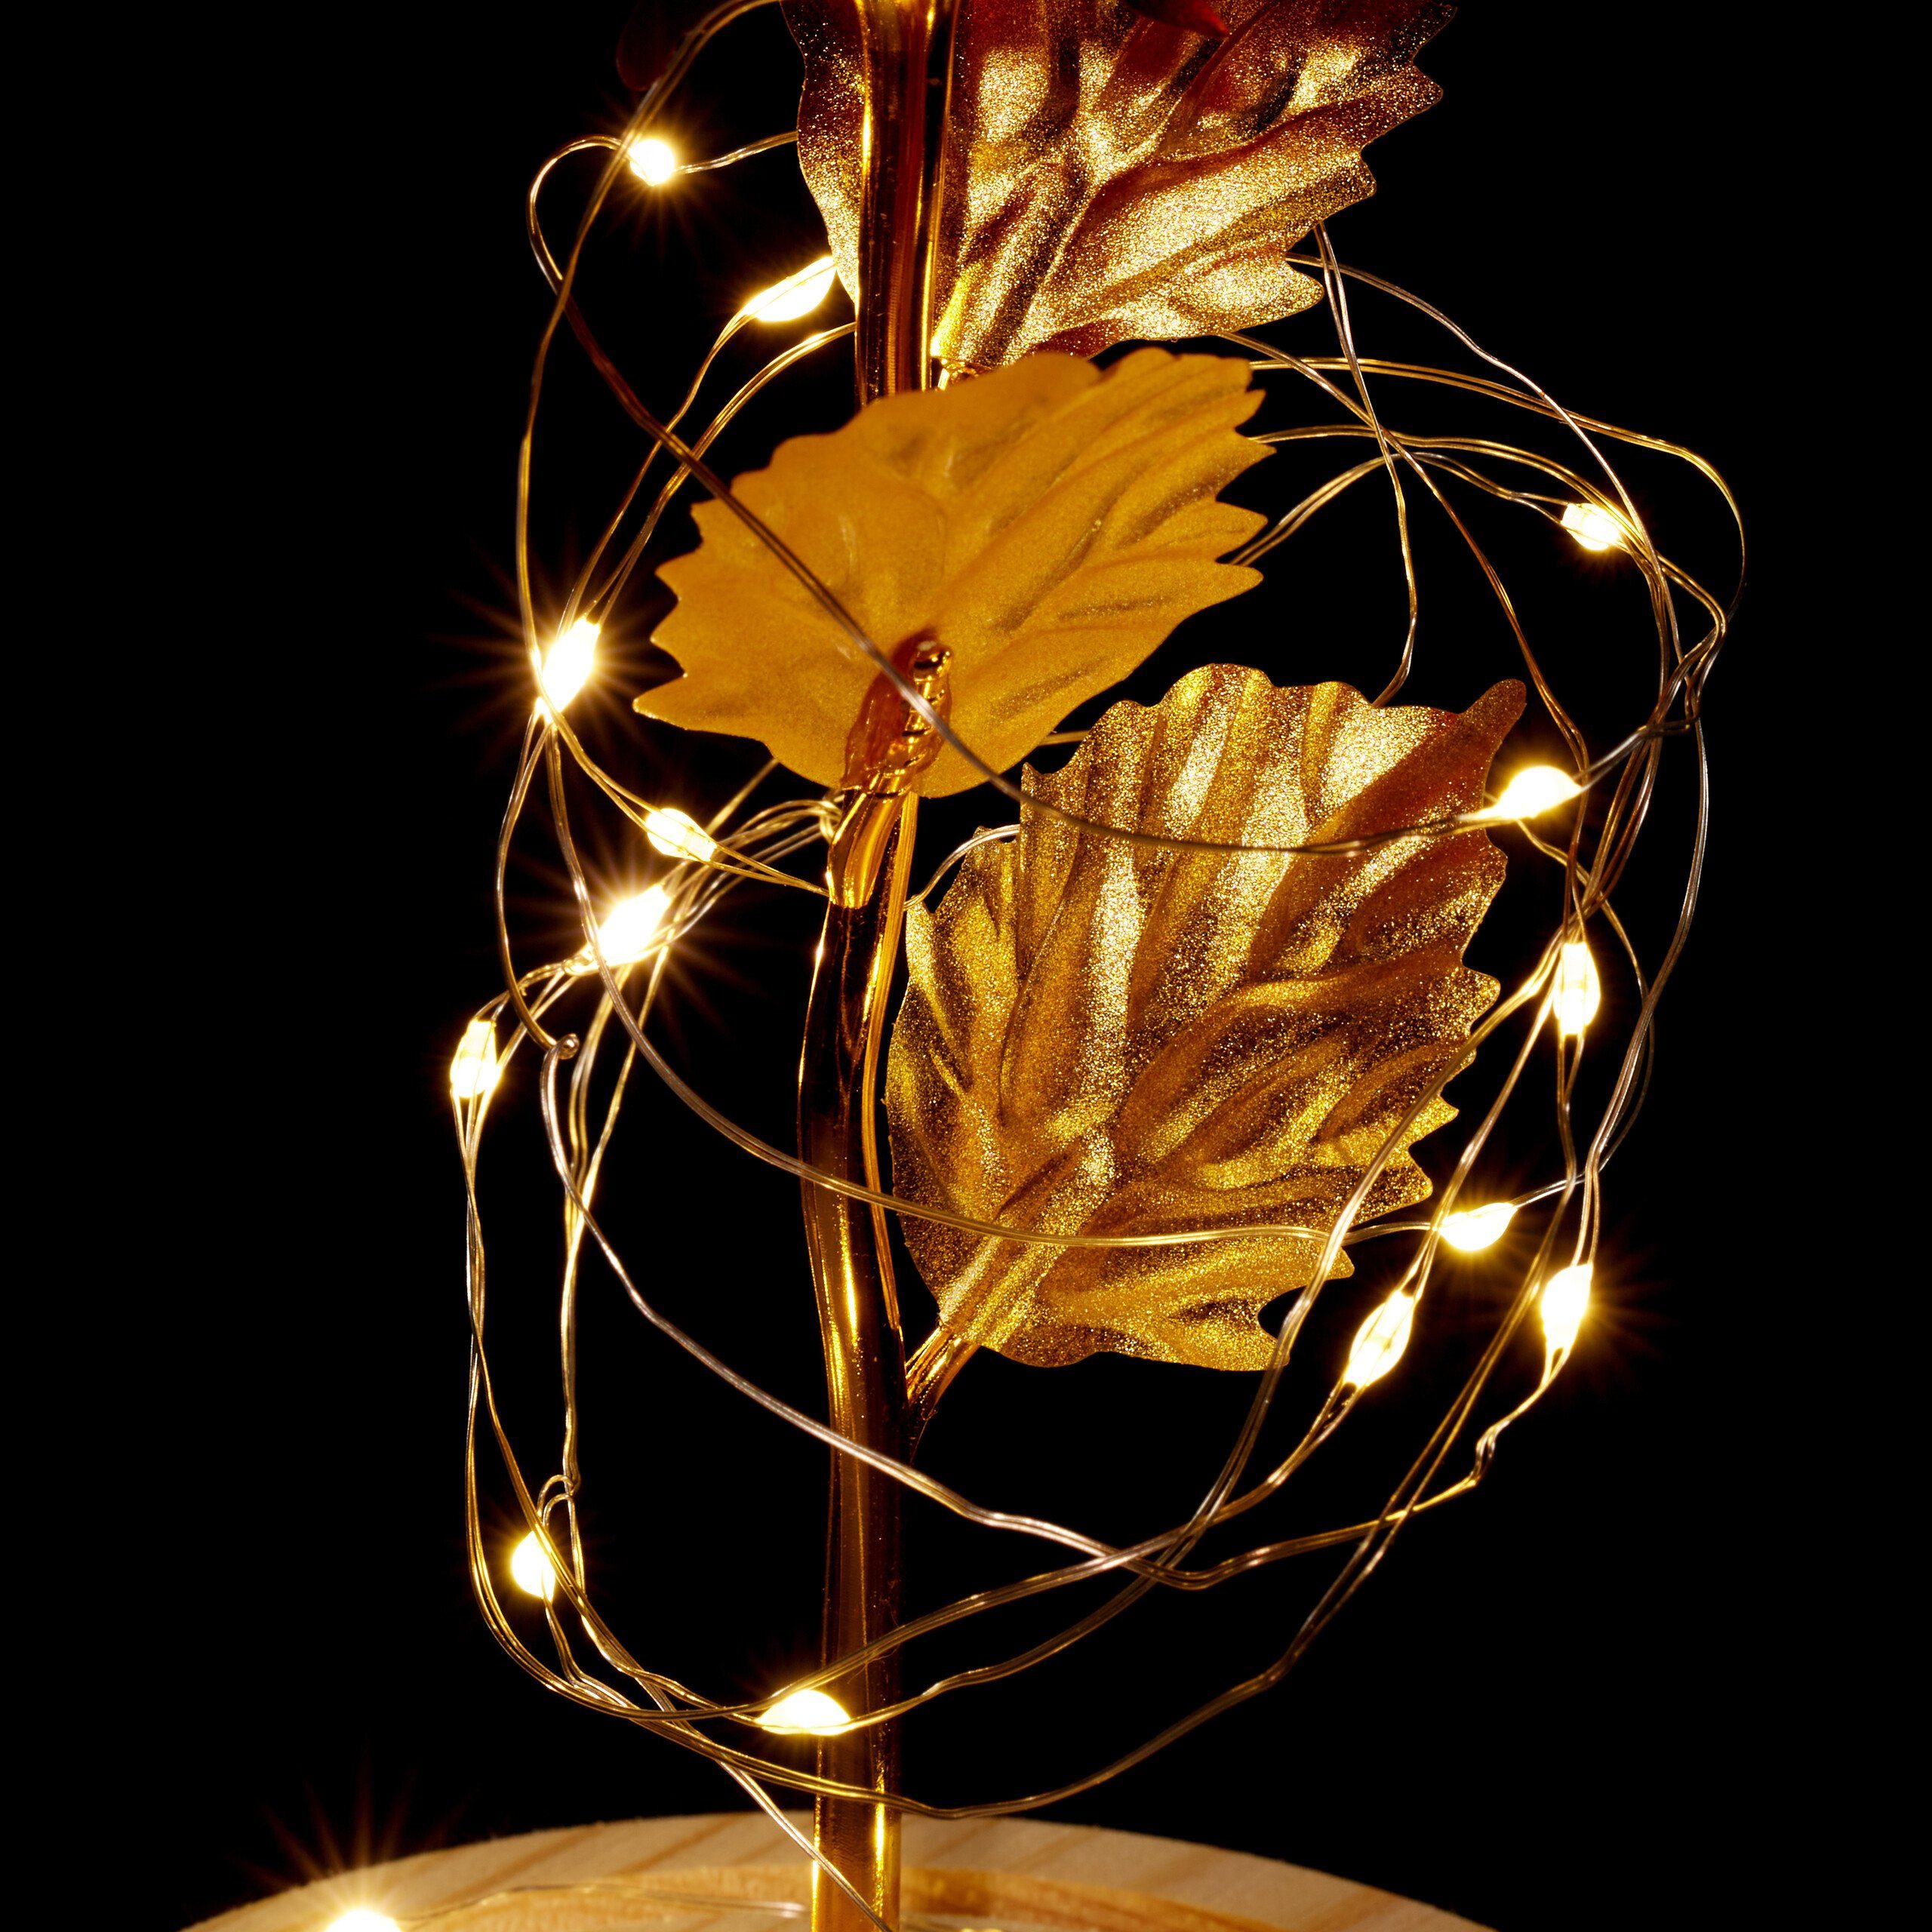 Kunstblume Ewige Rose im Glas, Höhe relaxdays, 22 cm